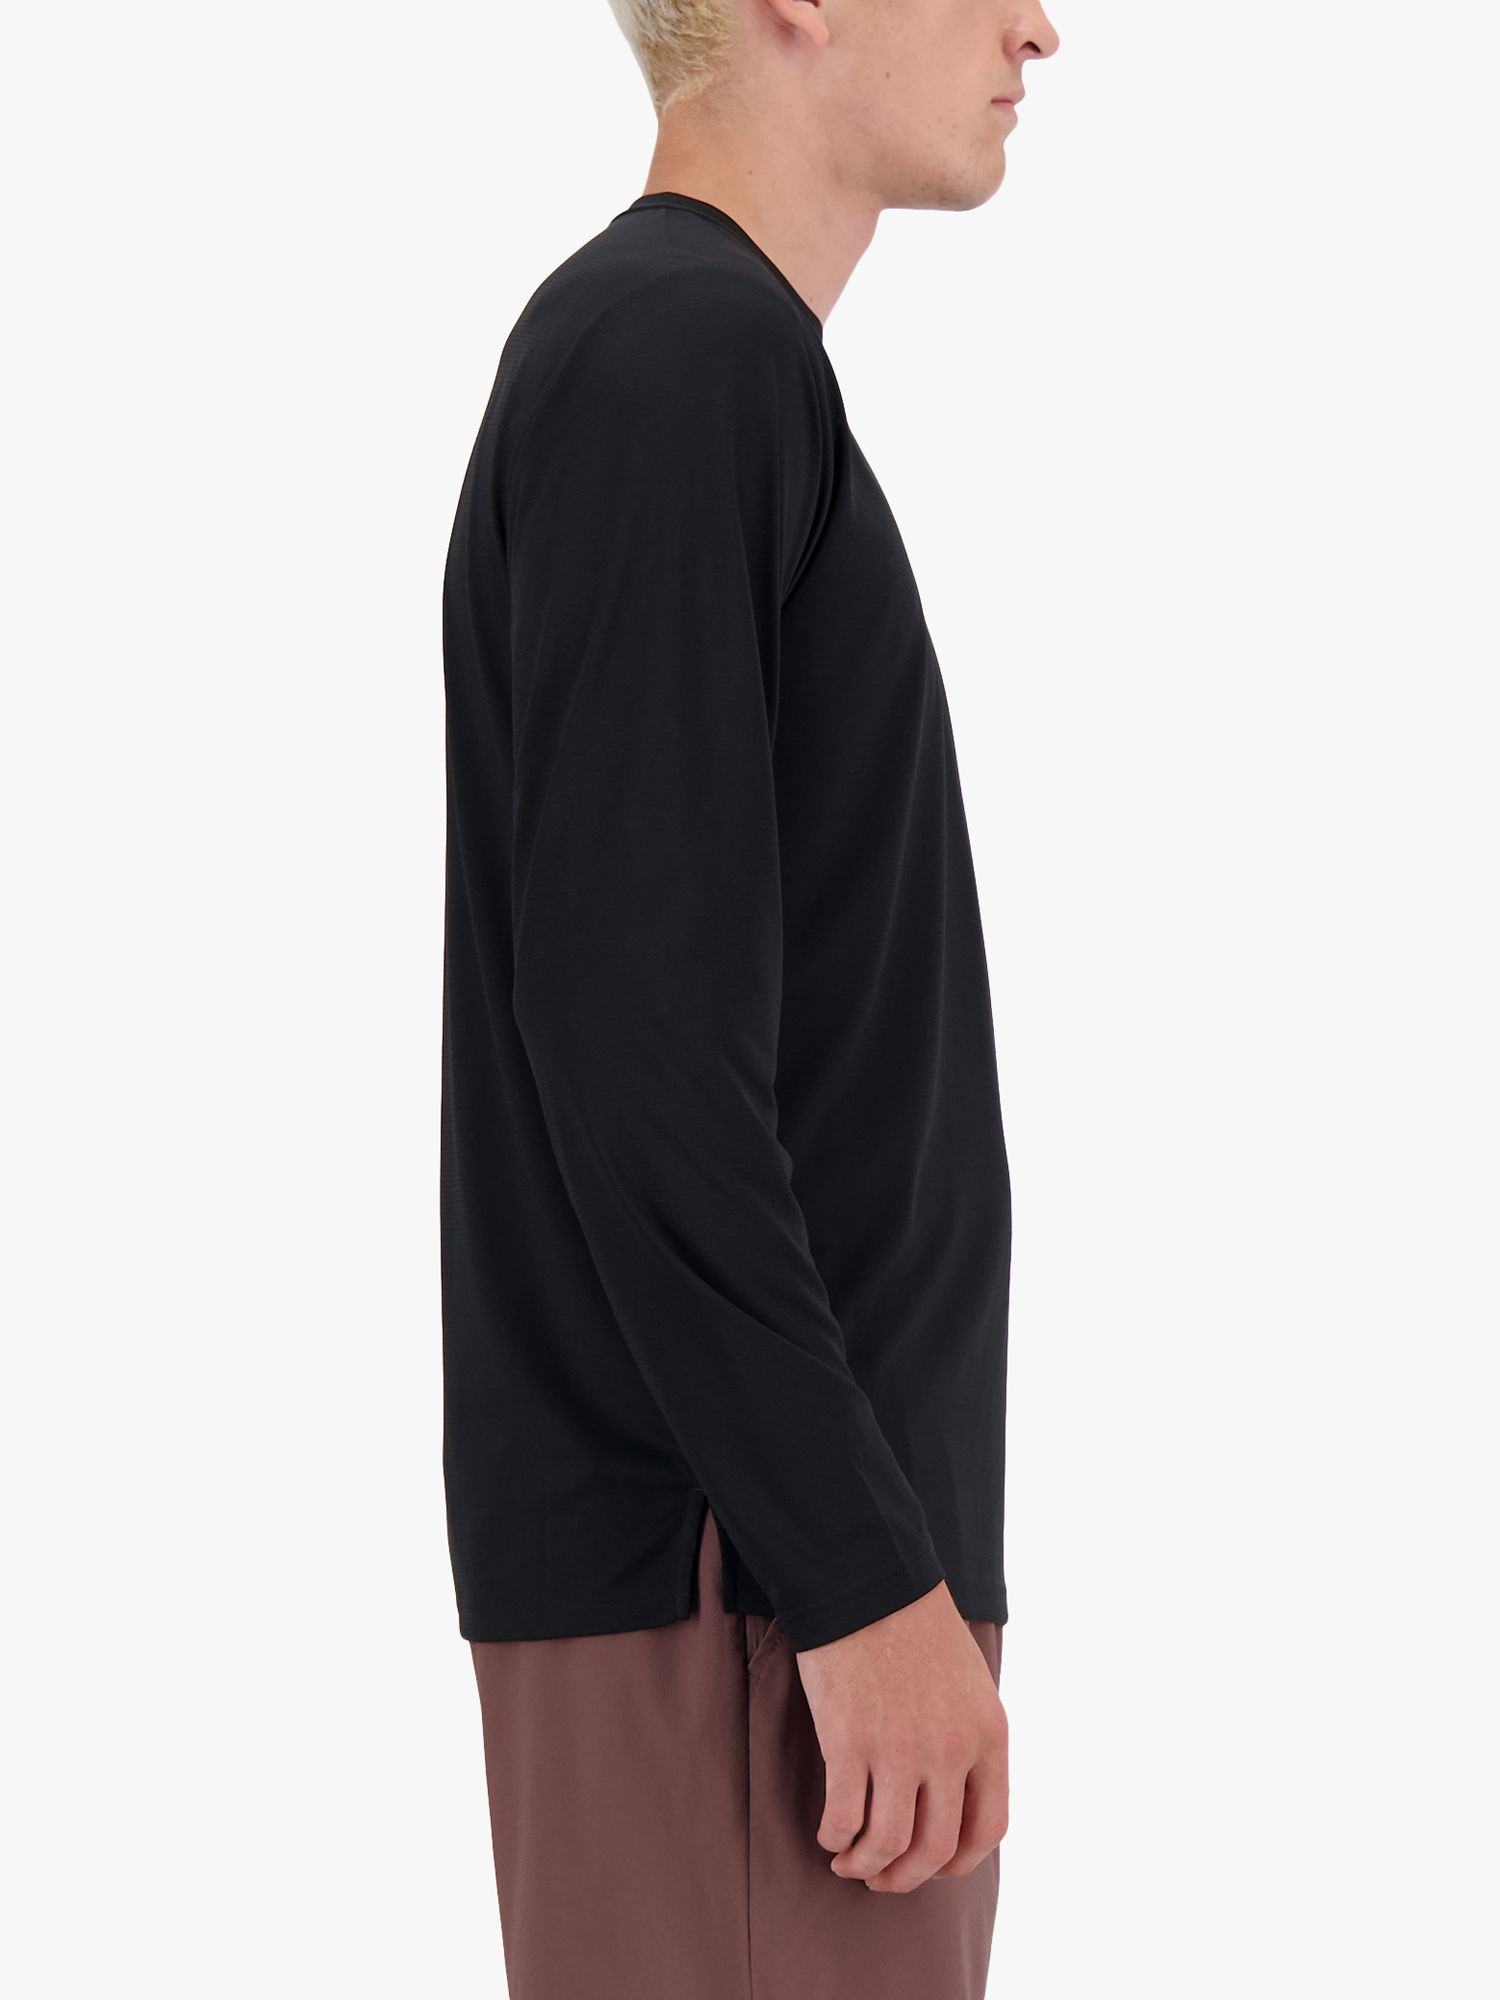 New Balance Long Sleeve Top, Black, XL